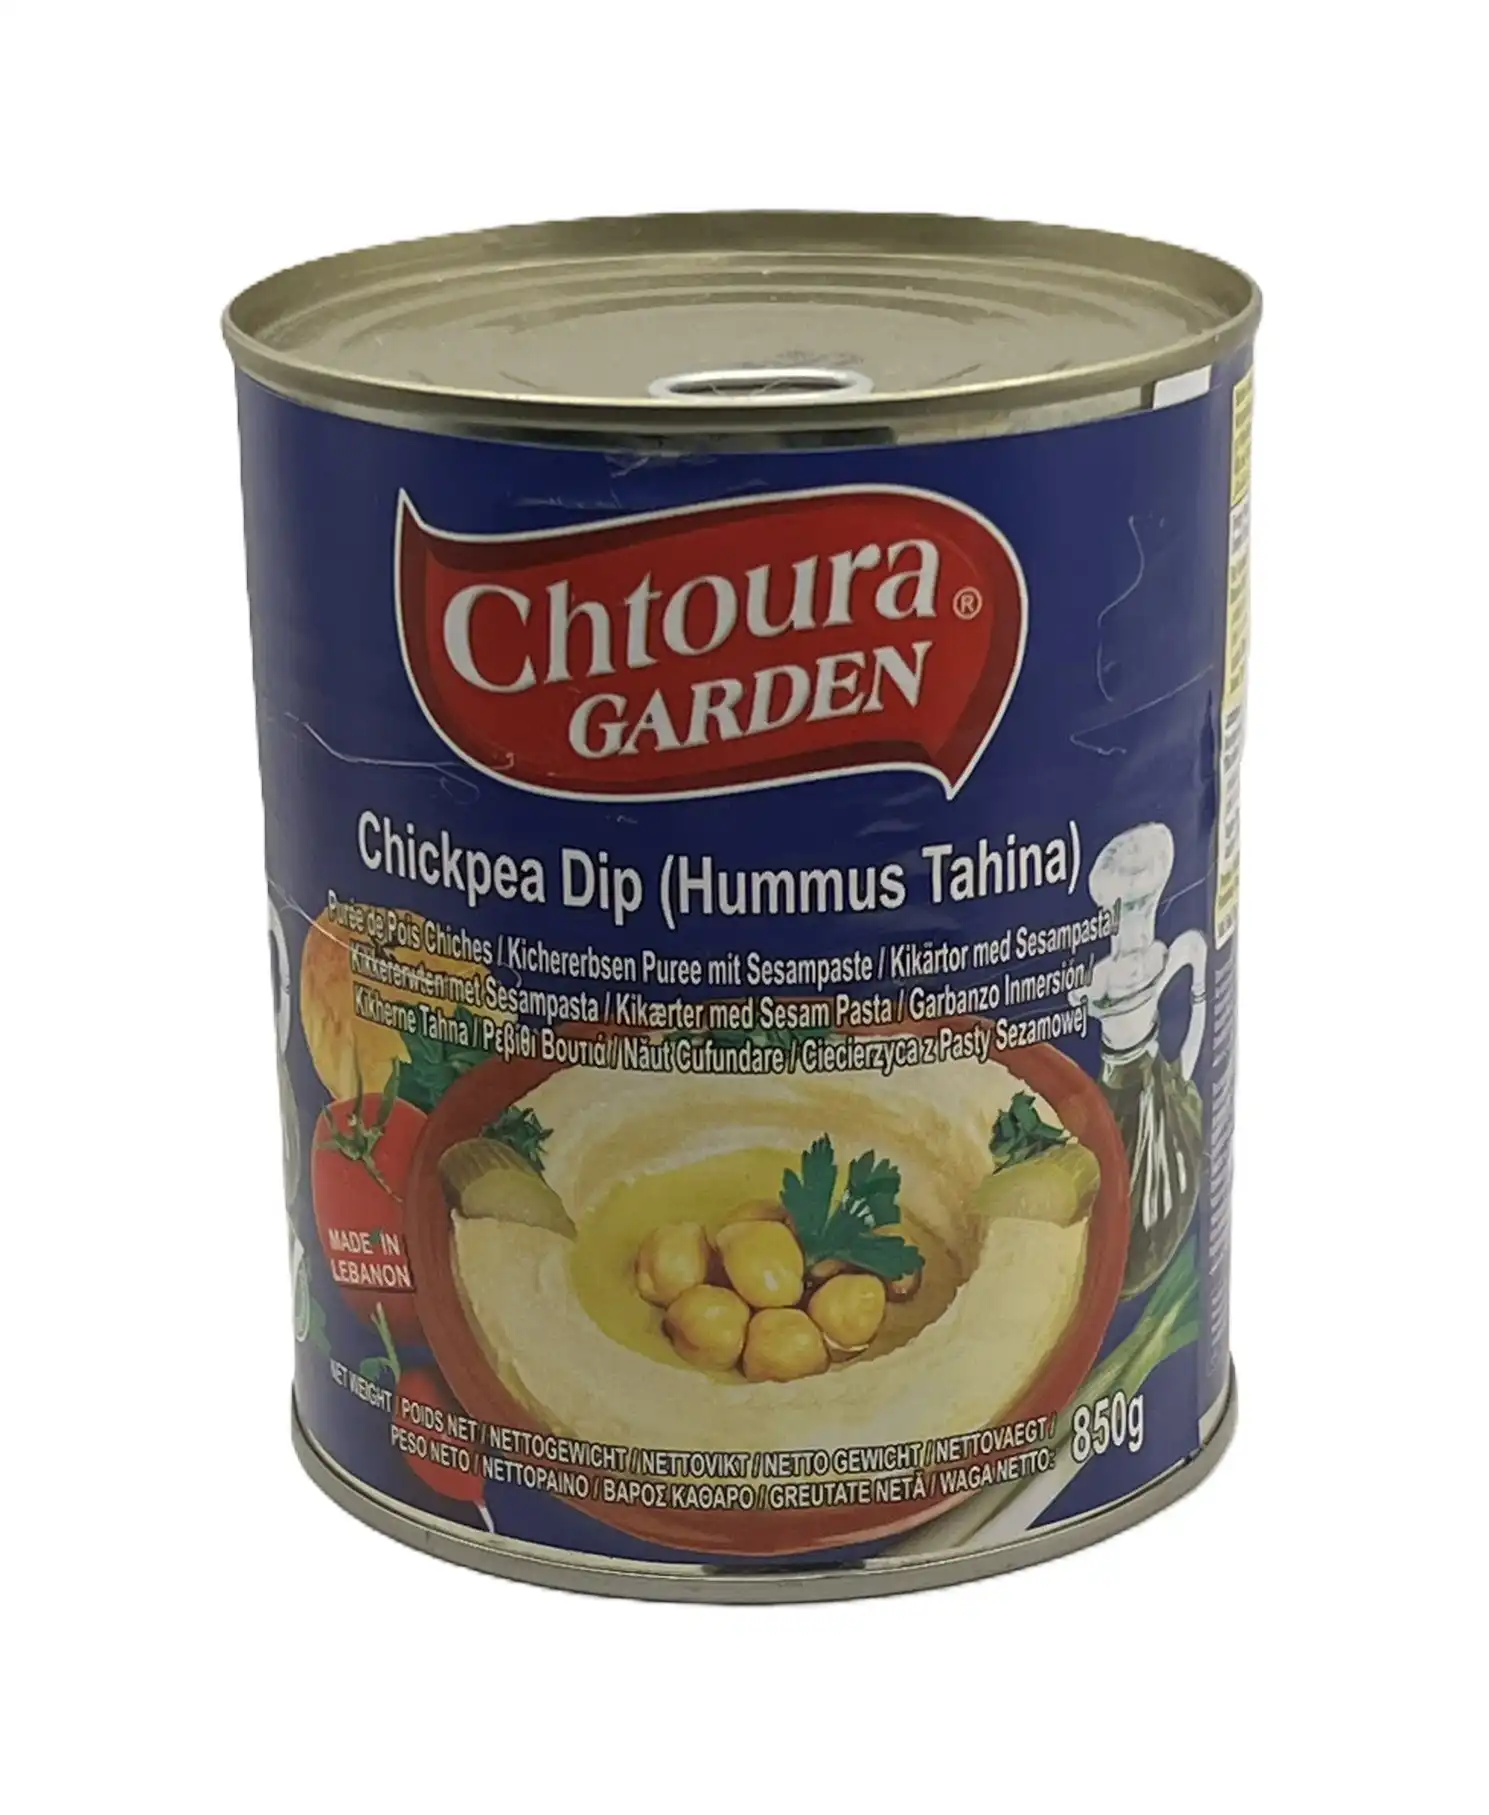 chickpea dip (hummus tahina)-chtoura garden